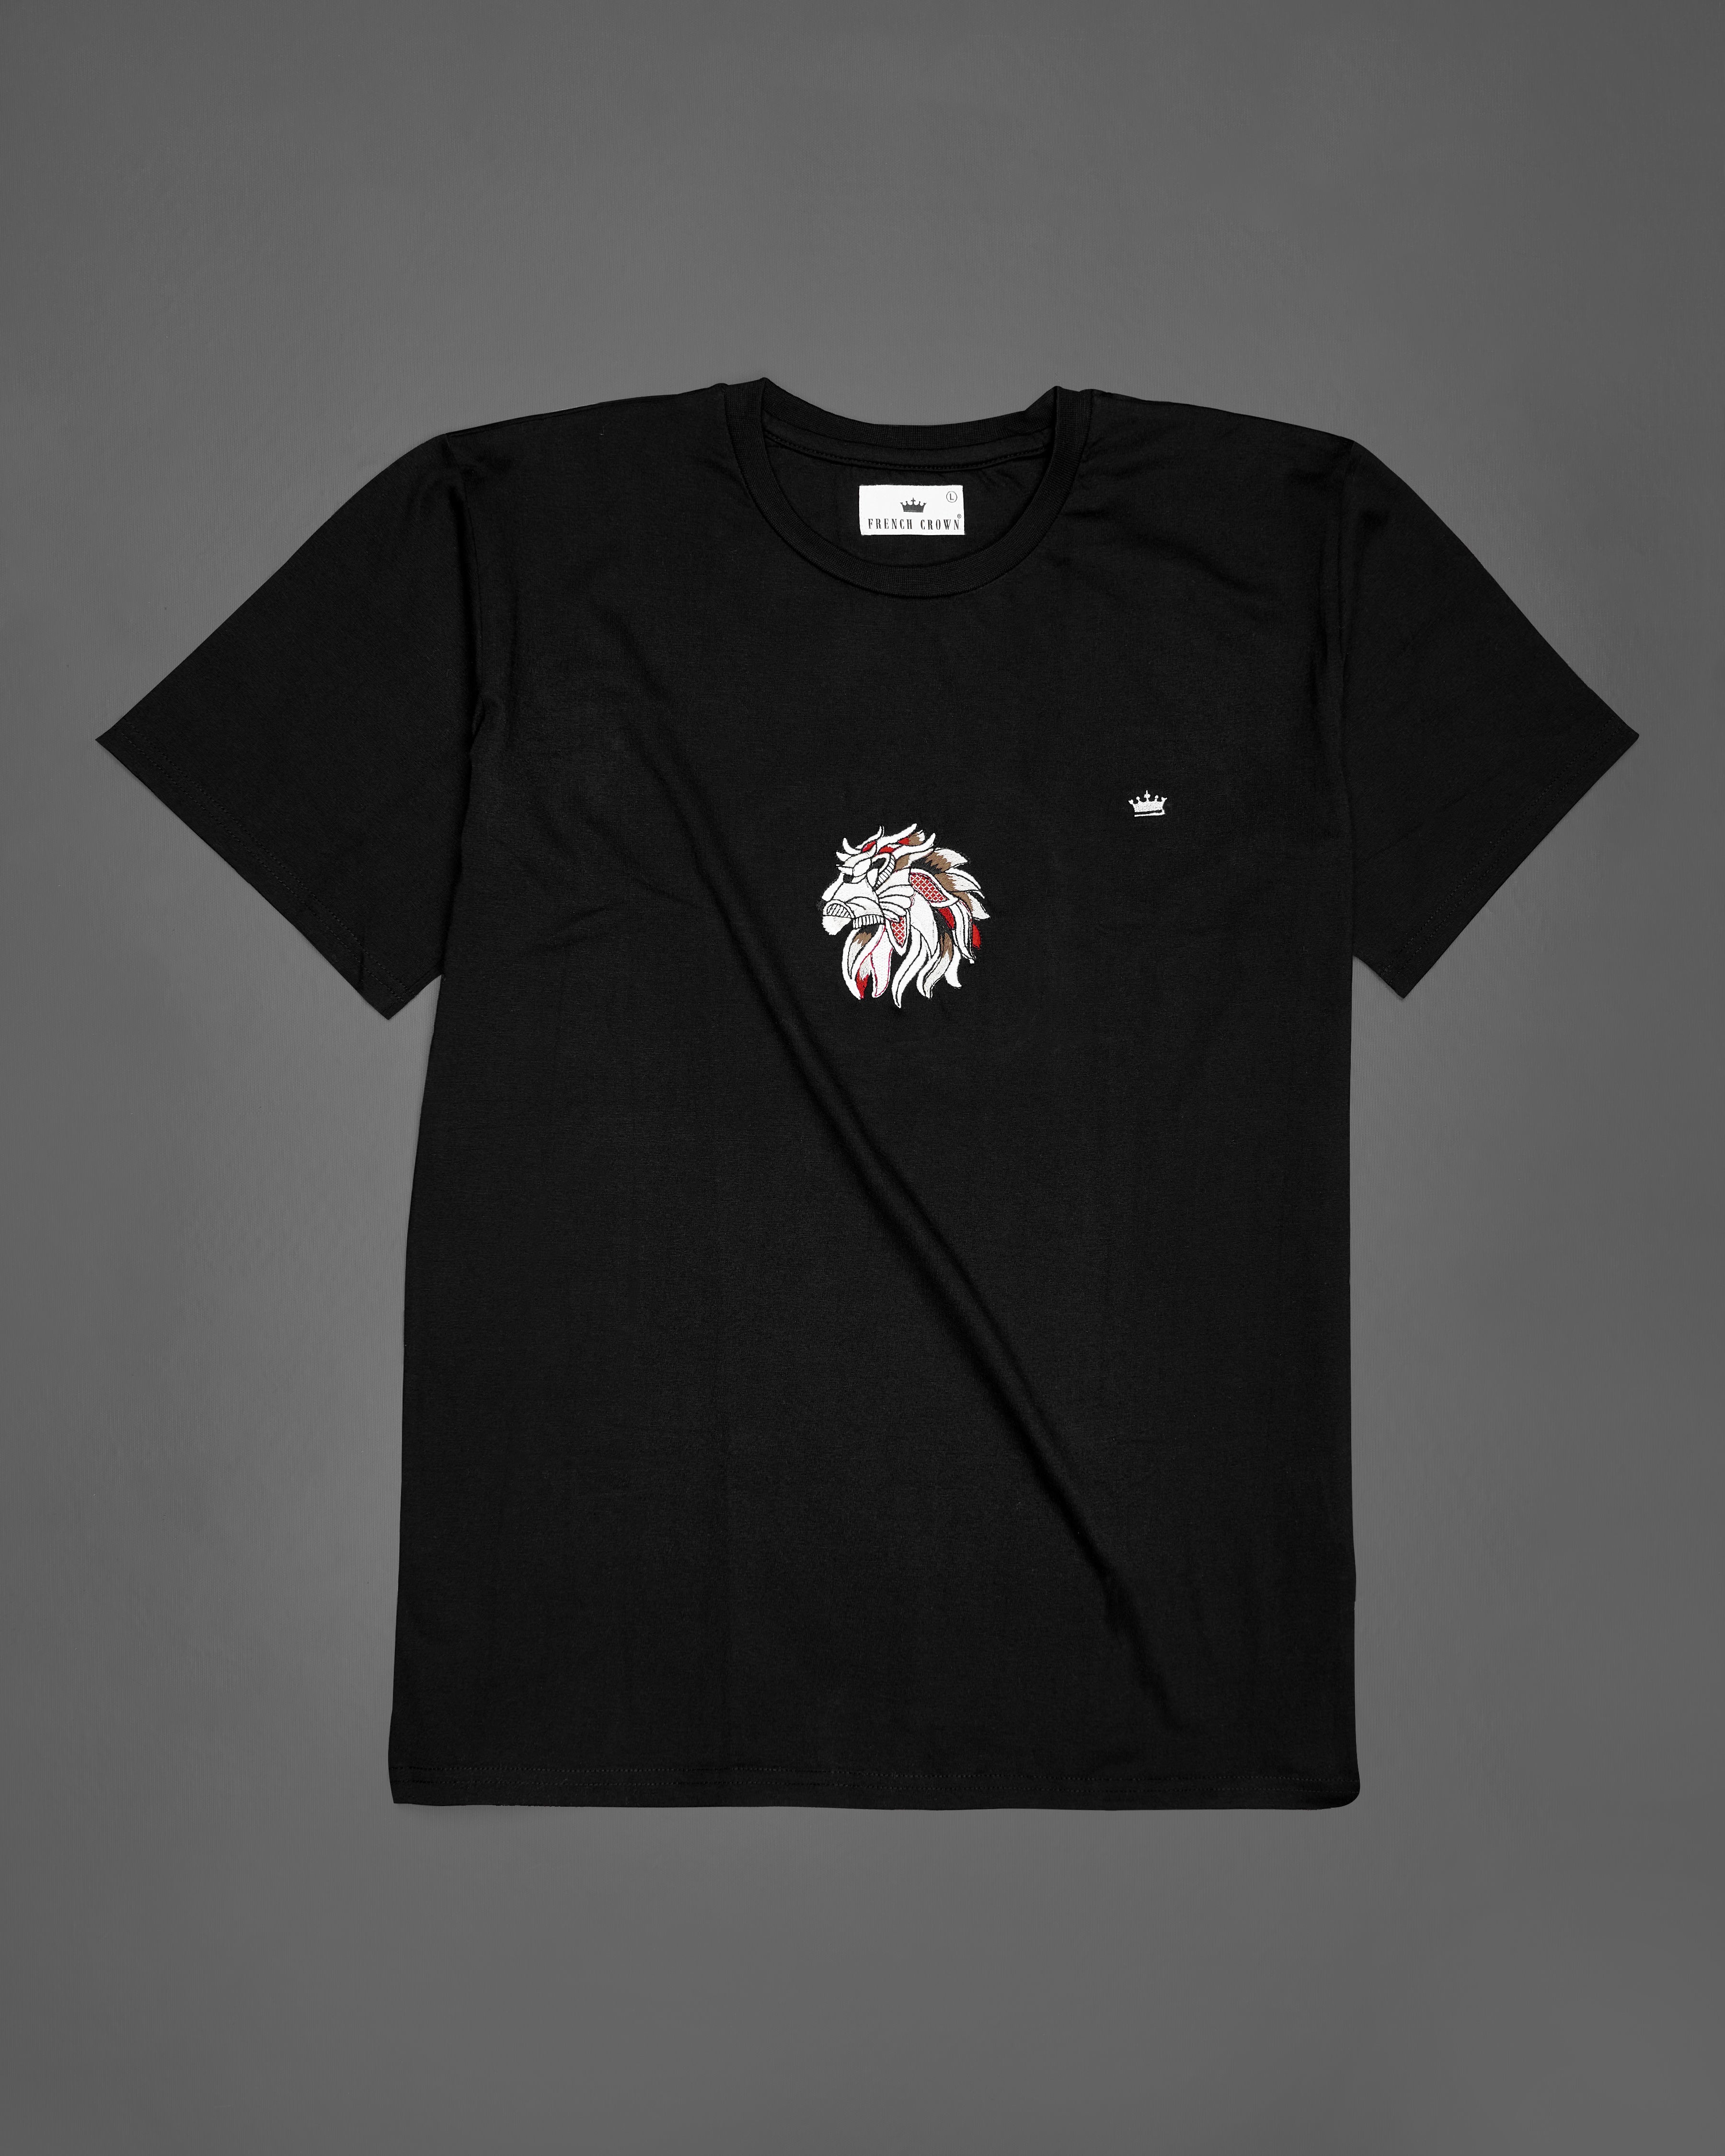 Jade Black Lion Embroidered Premium Cotton T-shirt TS021-W01-S, TS021-W01-M, TS021-W01-L, TS021-W01-XL, TS021-W01-XXL